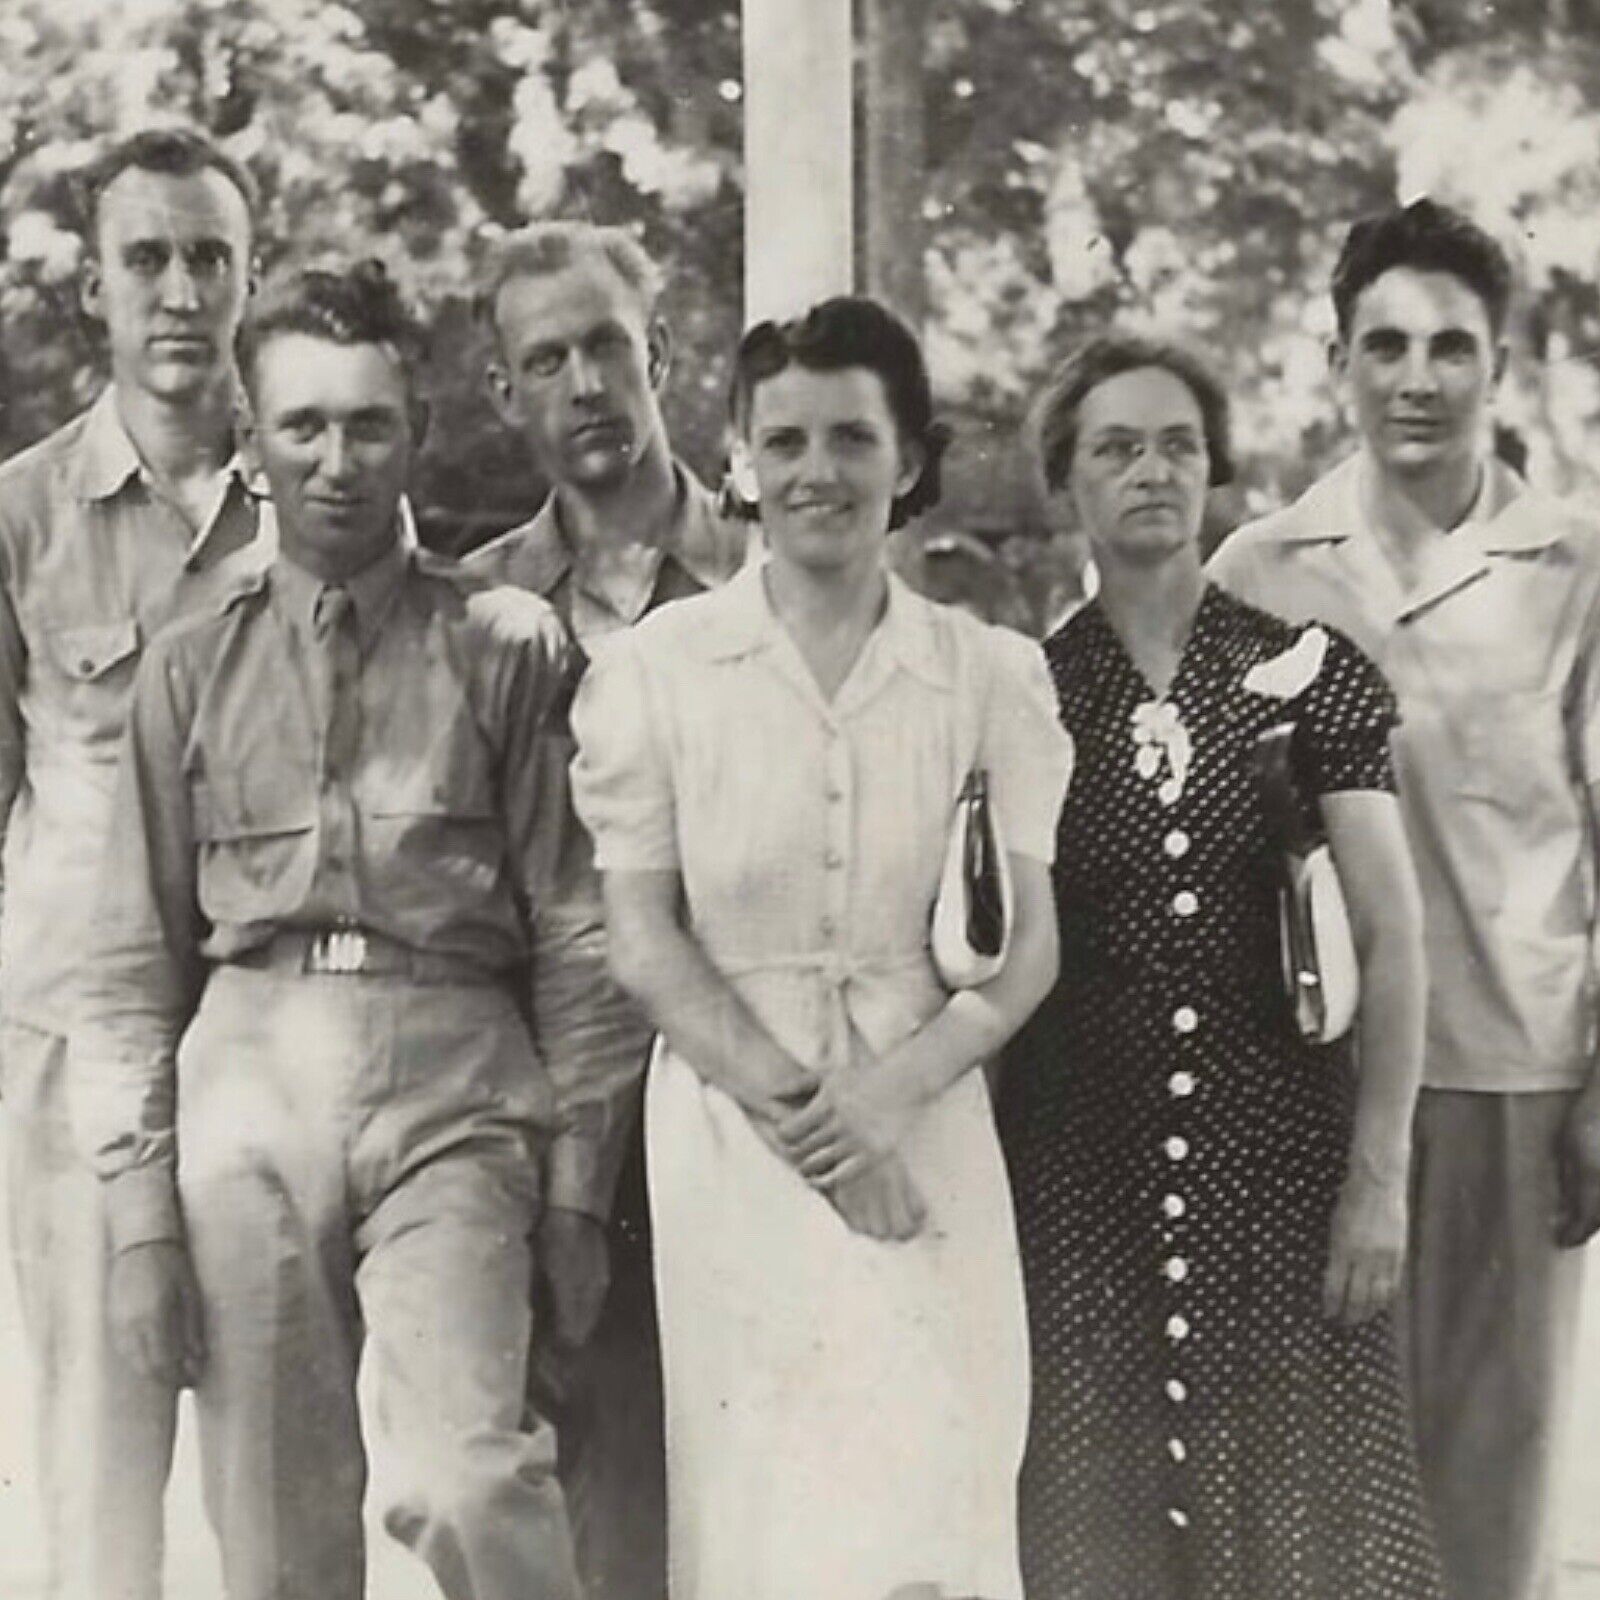 Nice Group Shot WWII Era Men Women In Uniform 1940s Vintage Snapshot Photo